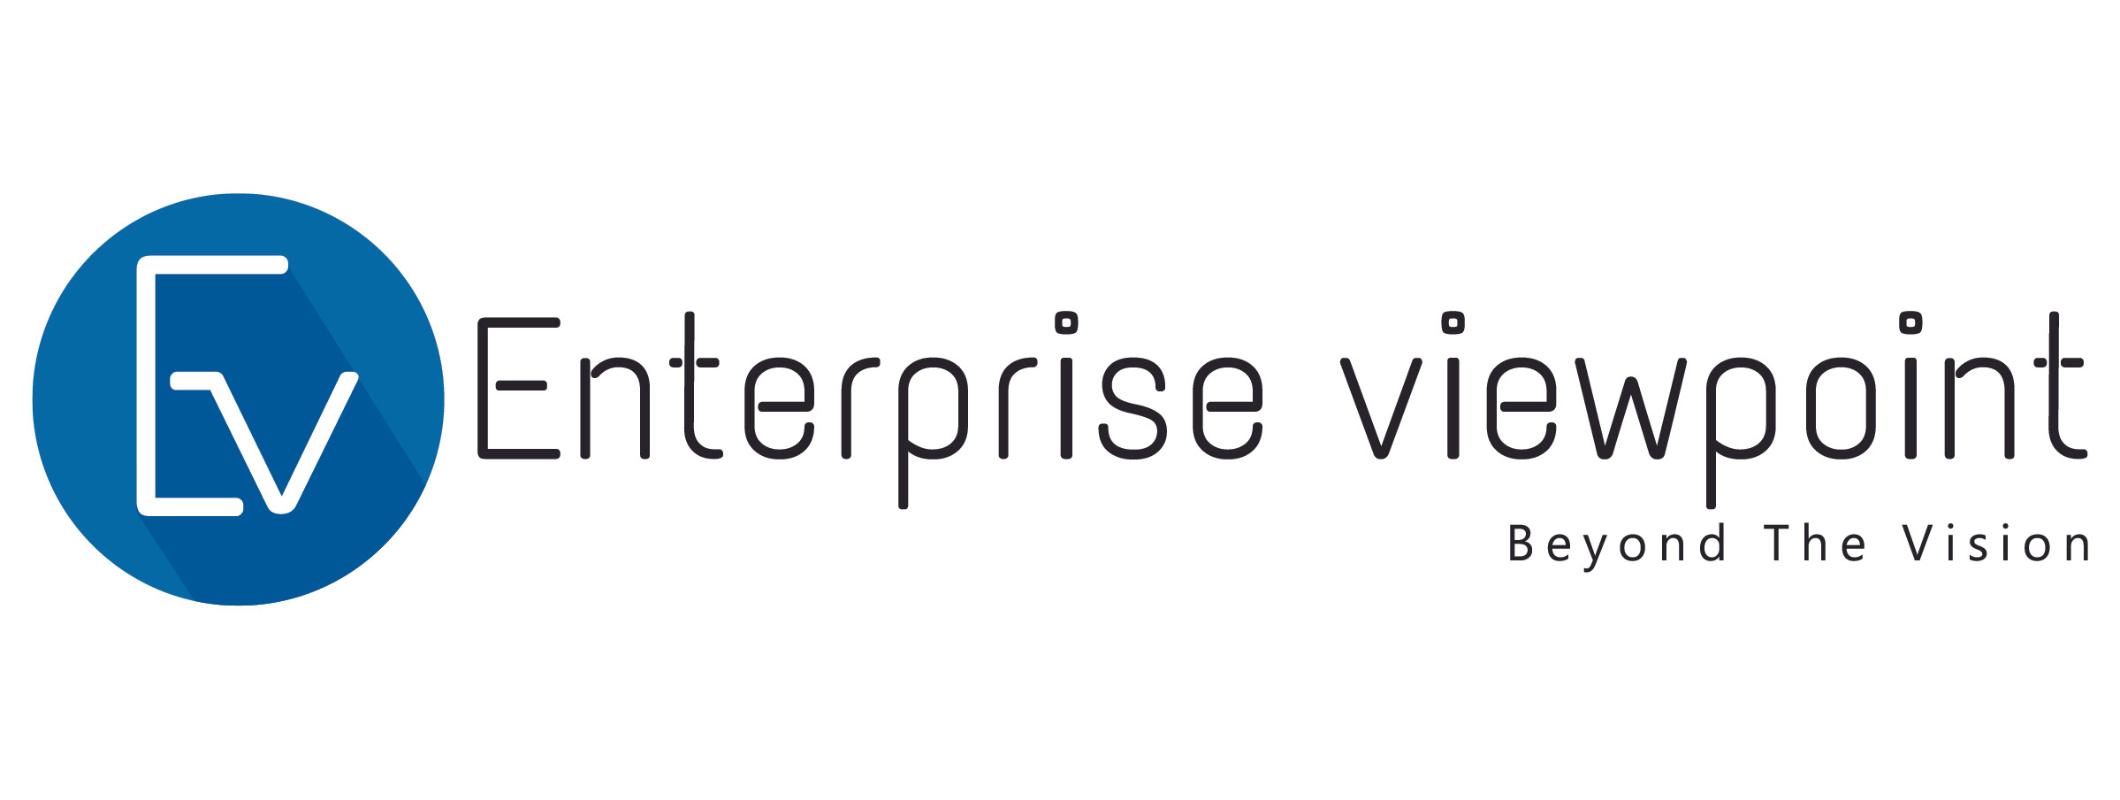 Enterprise viewpoint